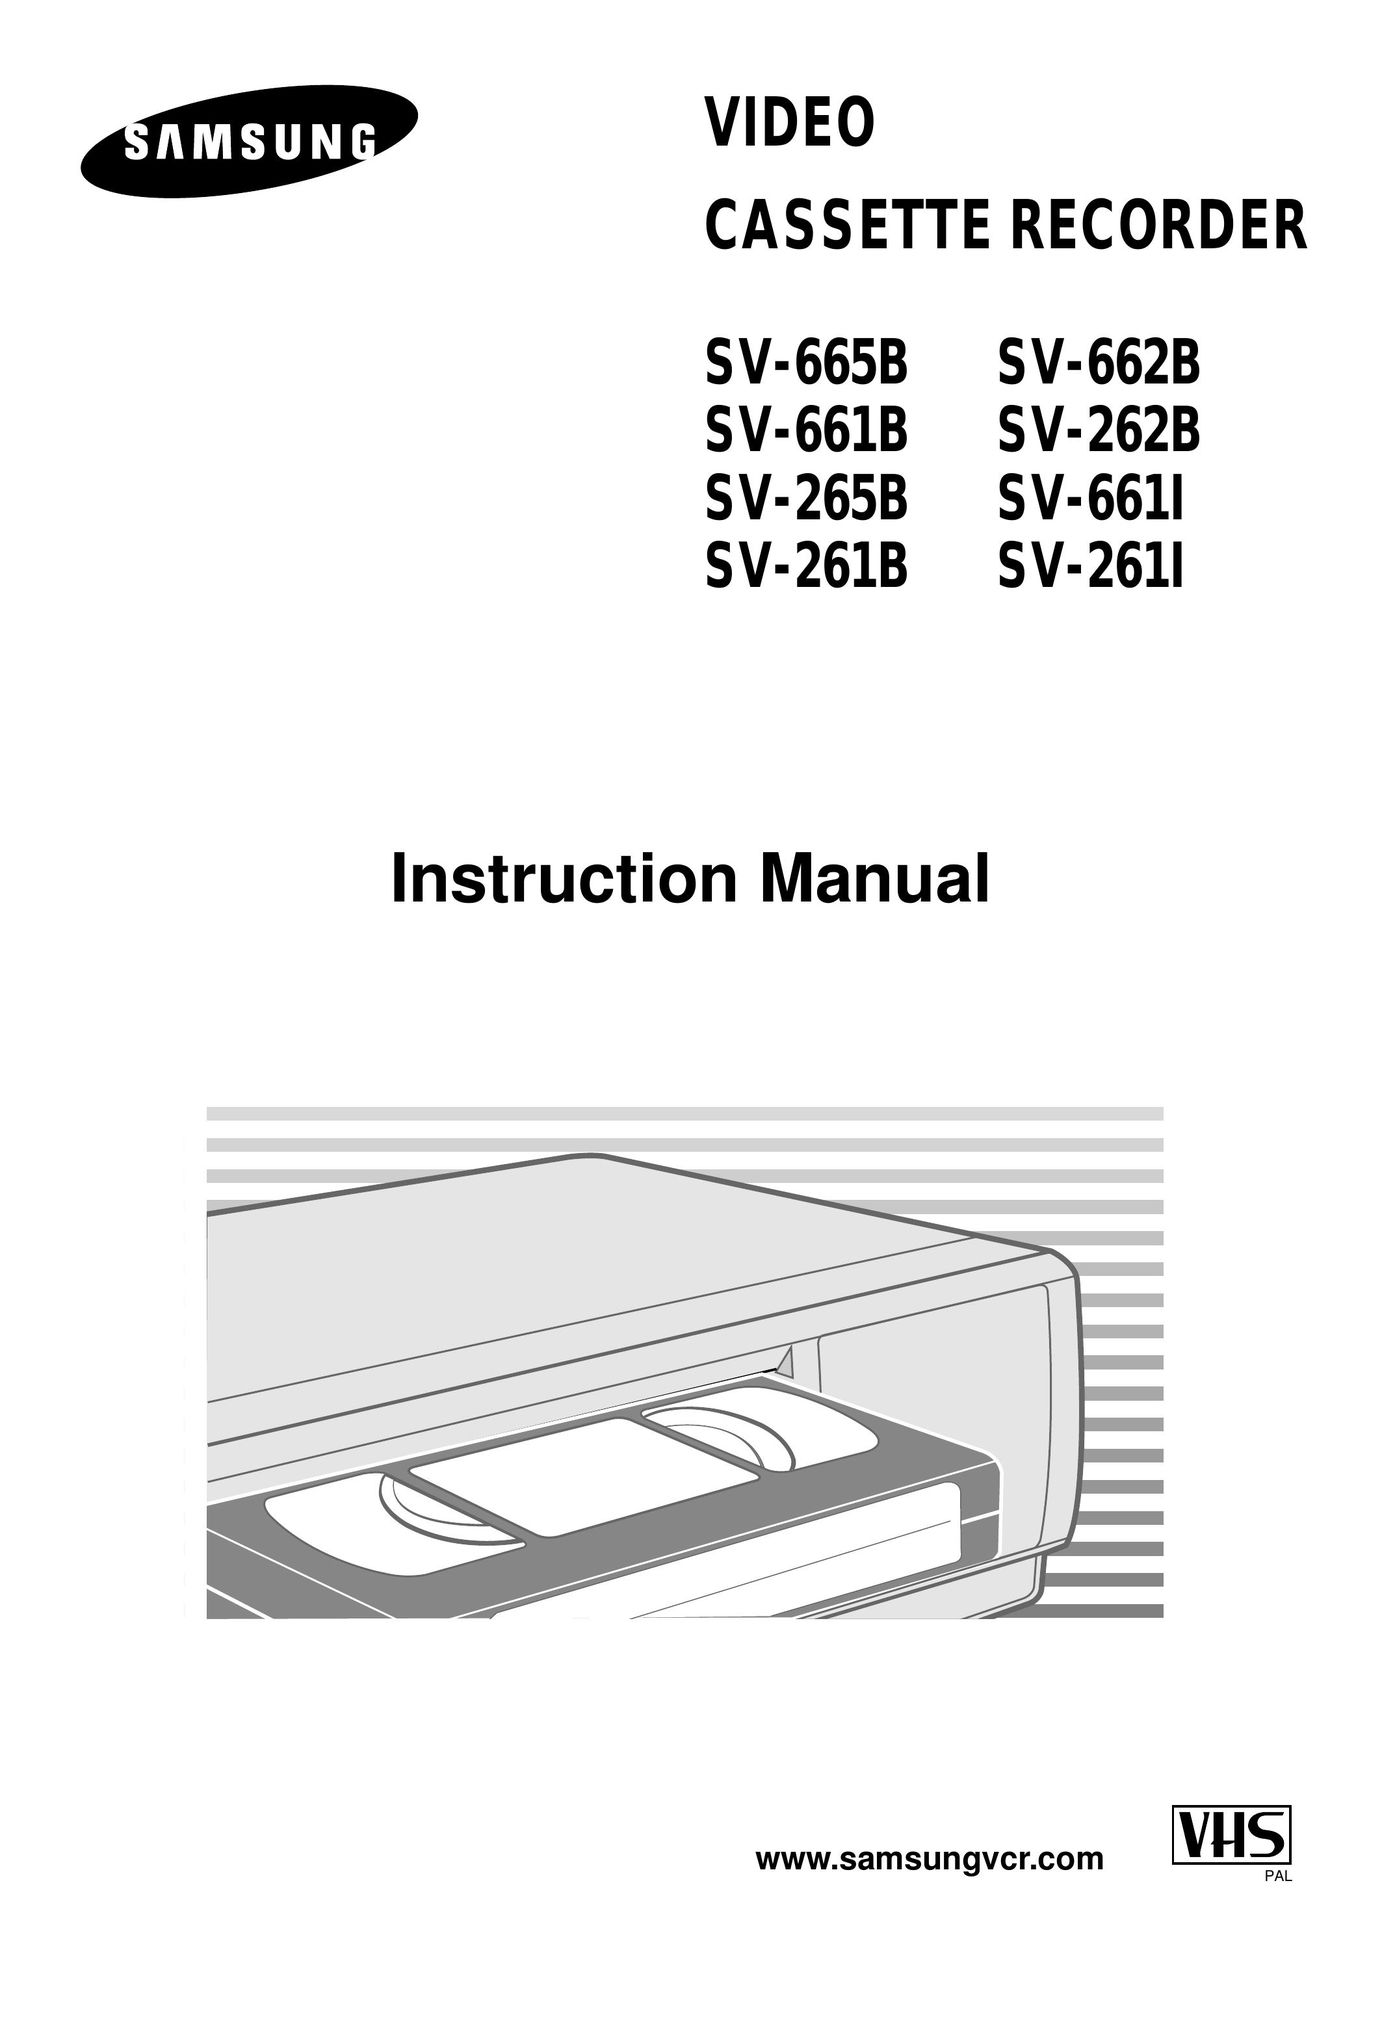 Samsung SV-661B VCR User Manual